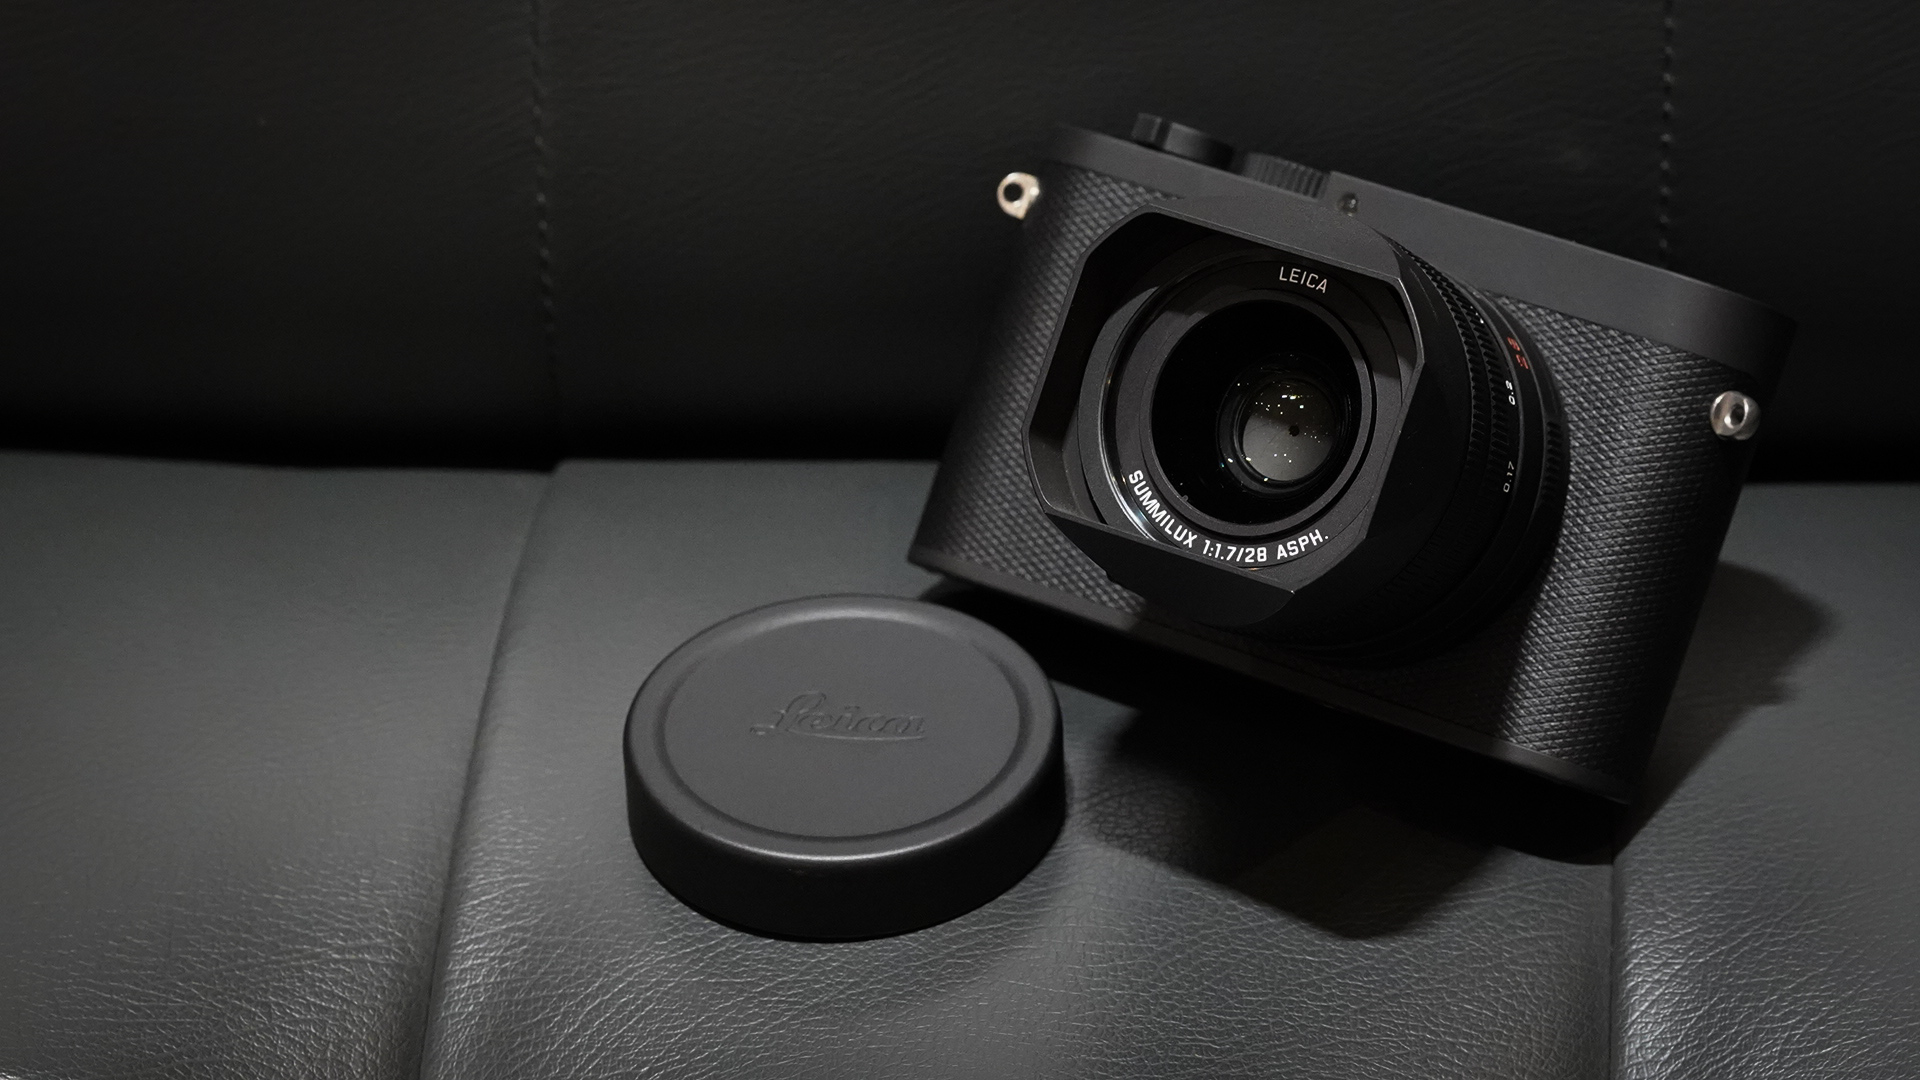 Leica Q-P, Kamera Compact dengan Finishing Premium